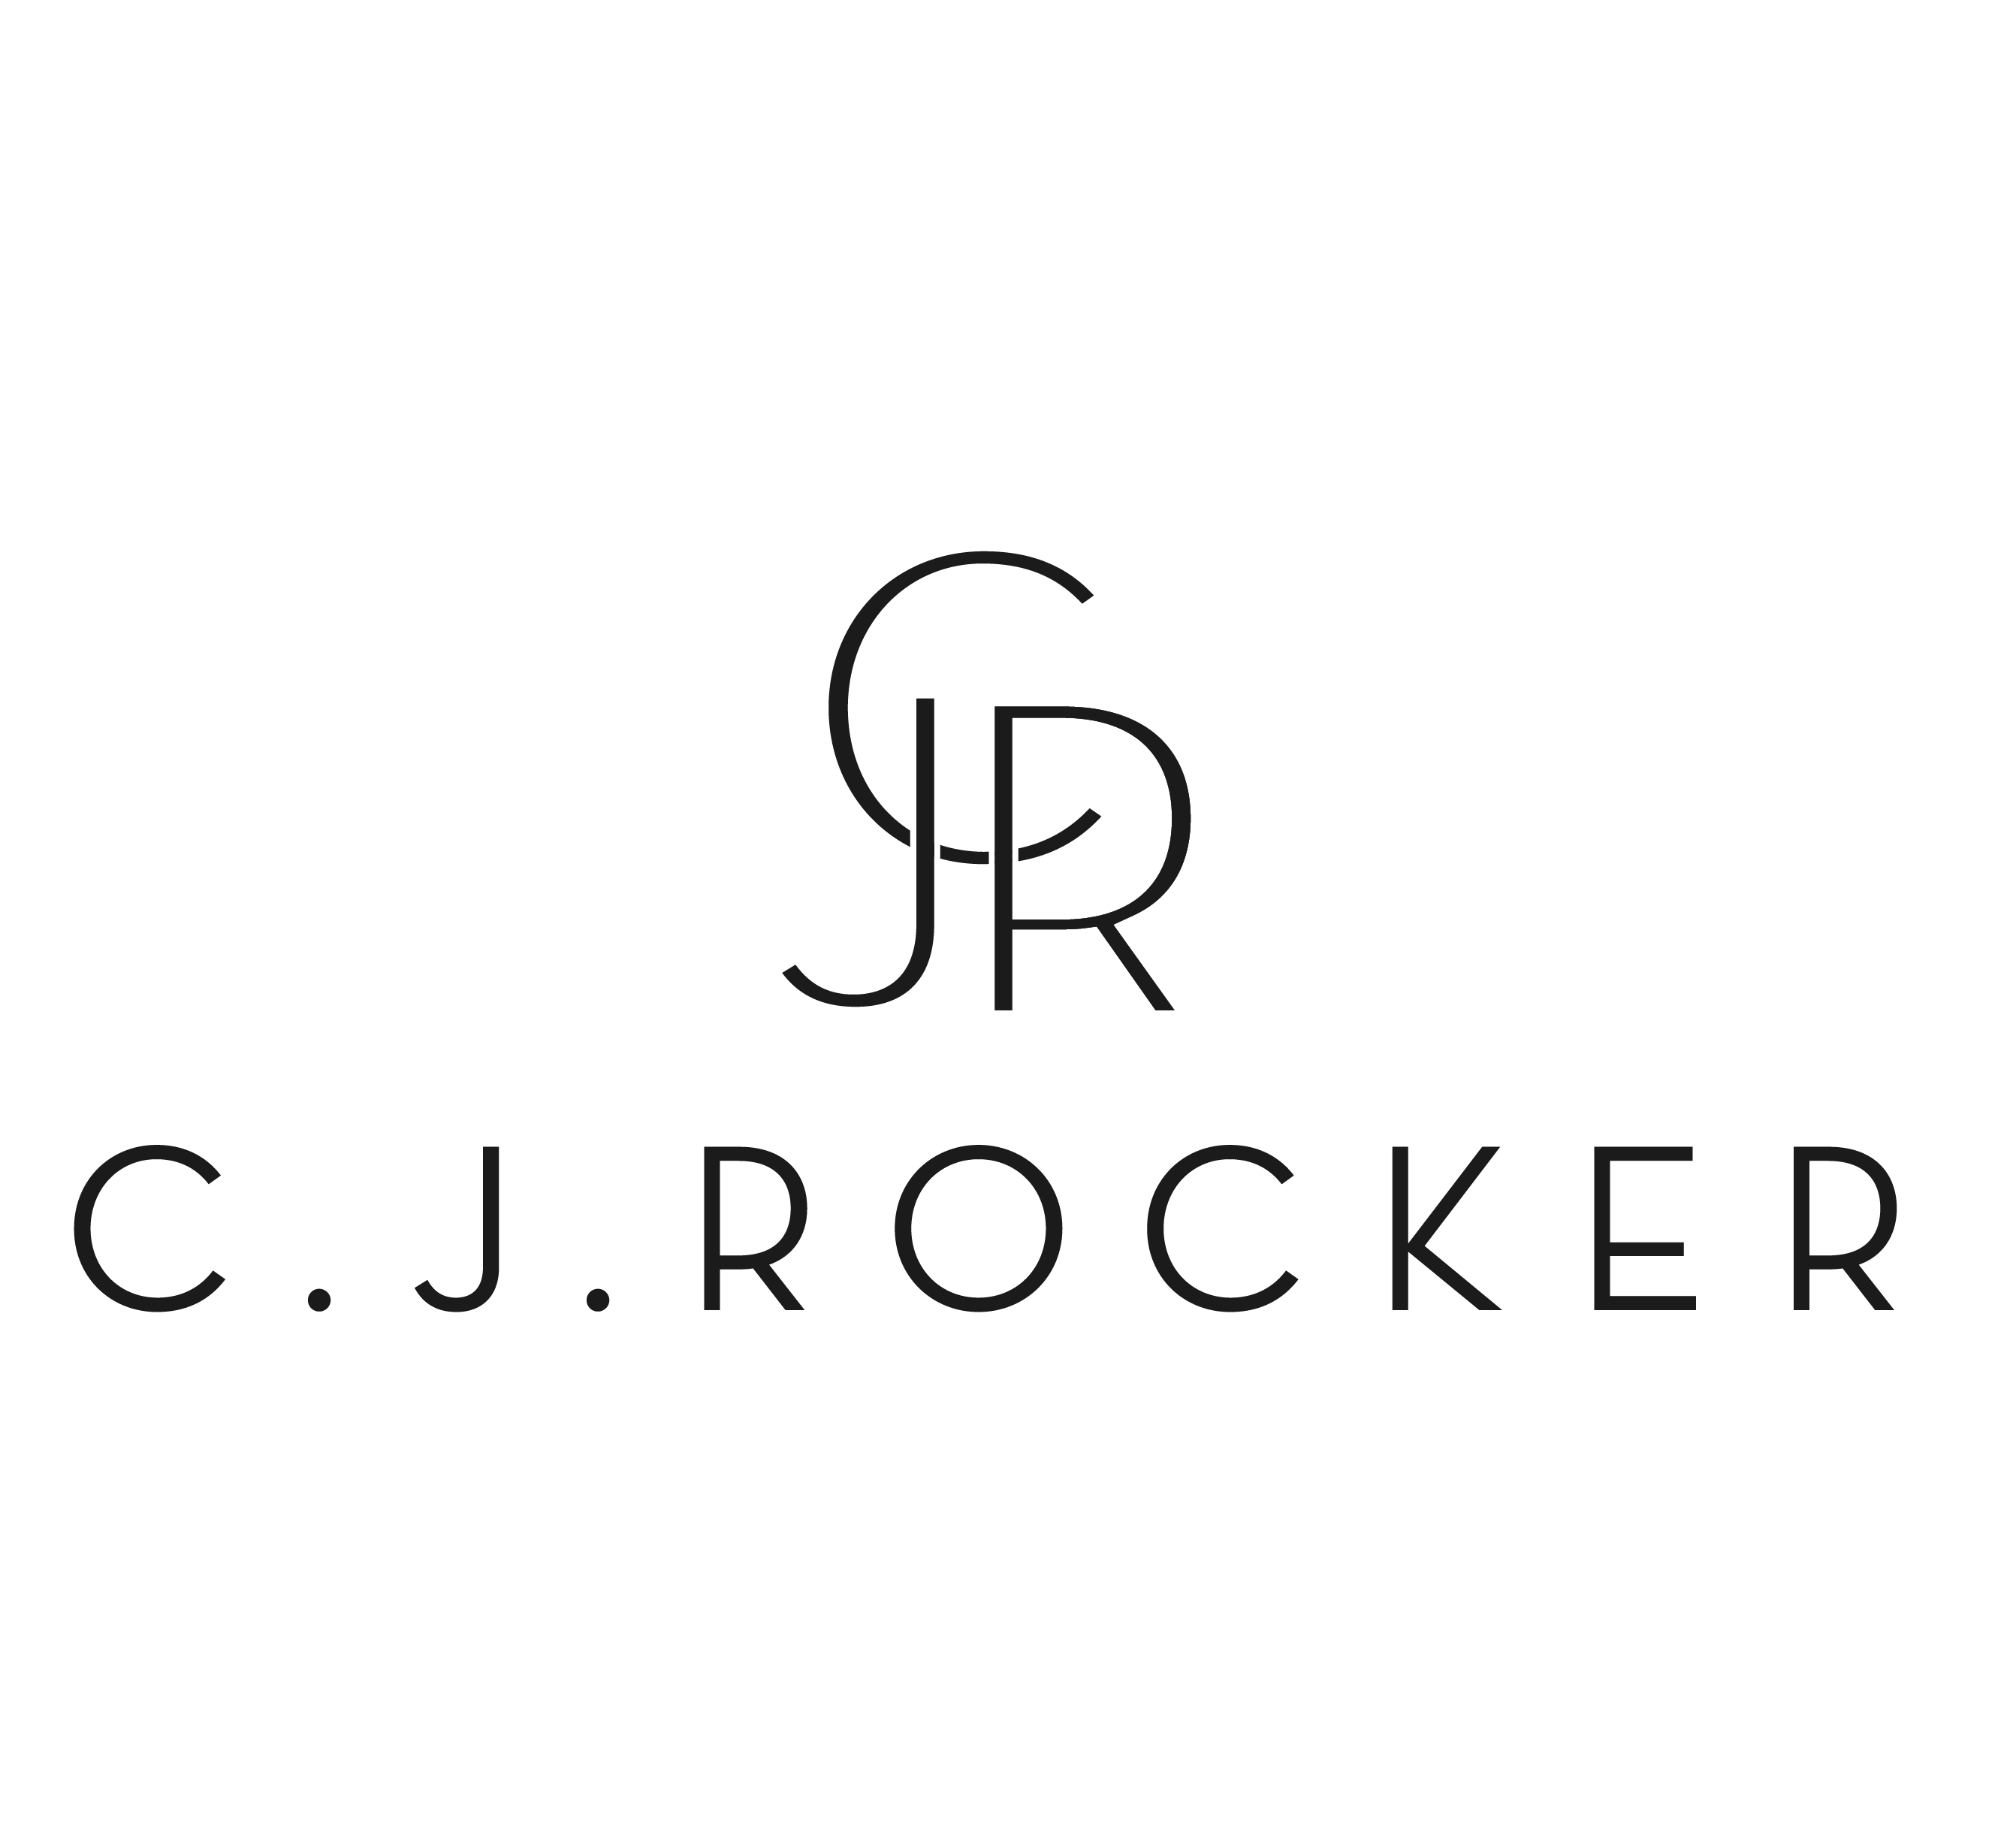 The CJR Necklace Extenders - C.J.ROCKER